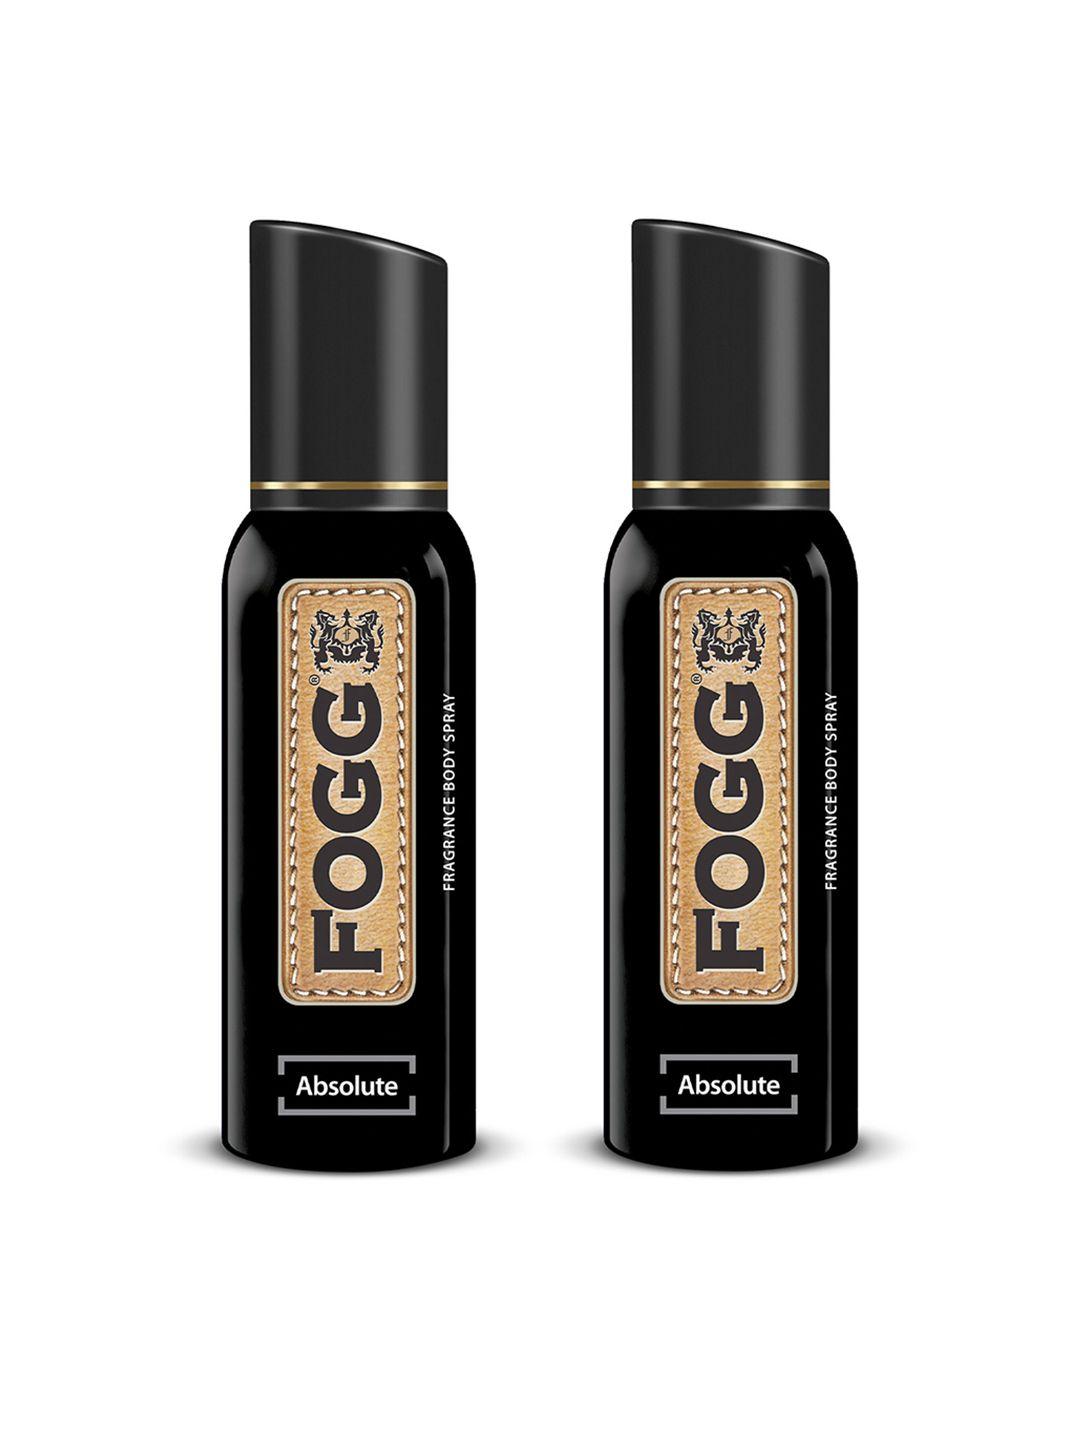 fogg set of 2 absolute fragrance body spray - 150 ml each